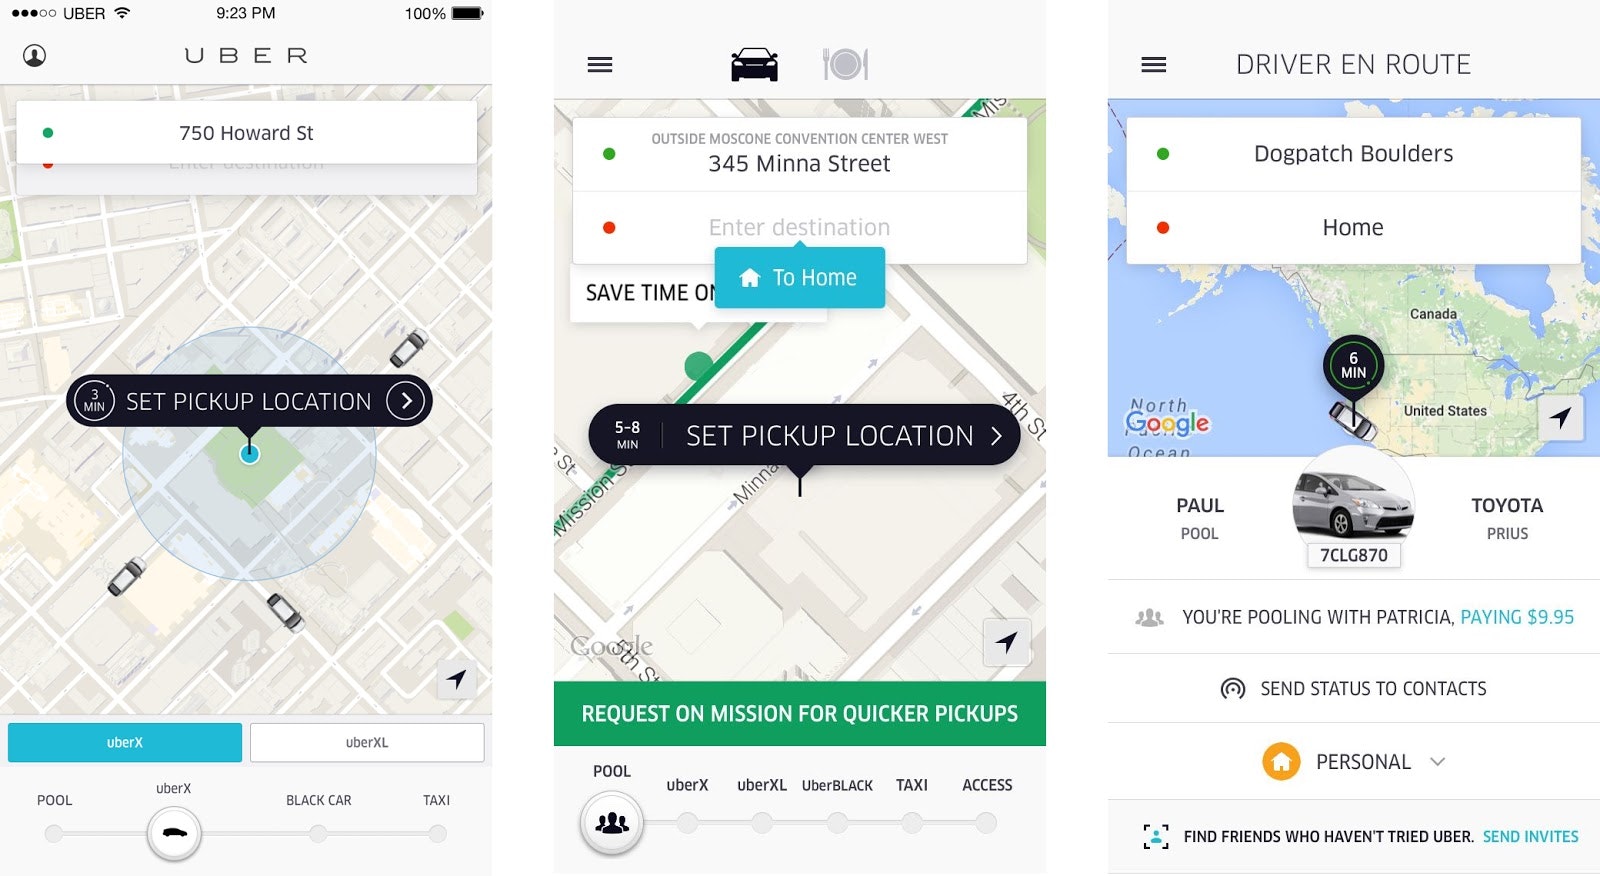 Uber app design changing 2012-2016